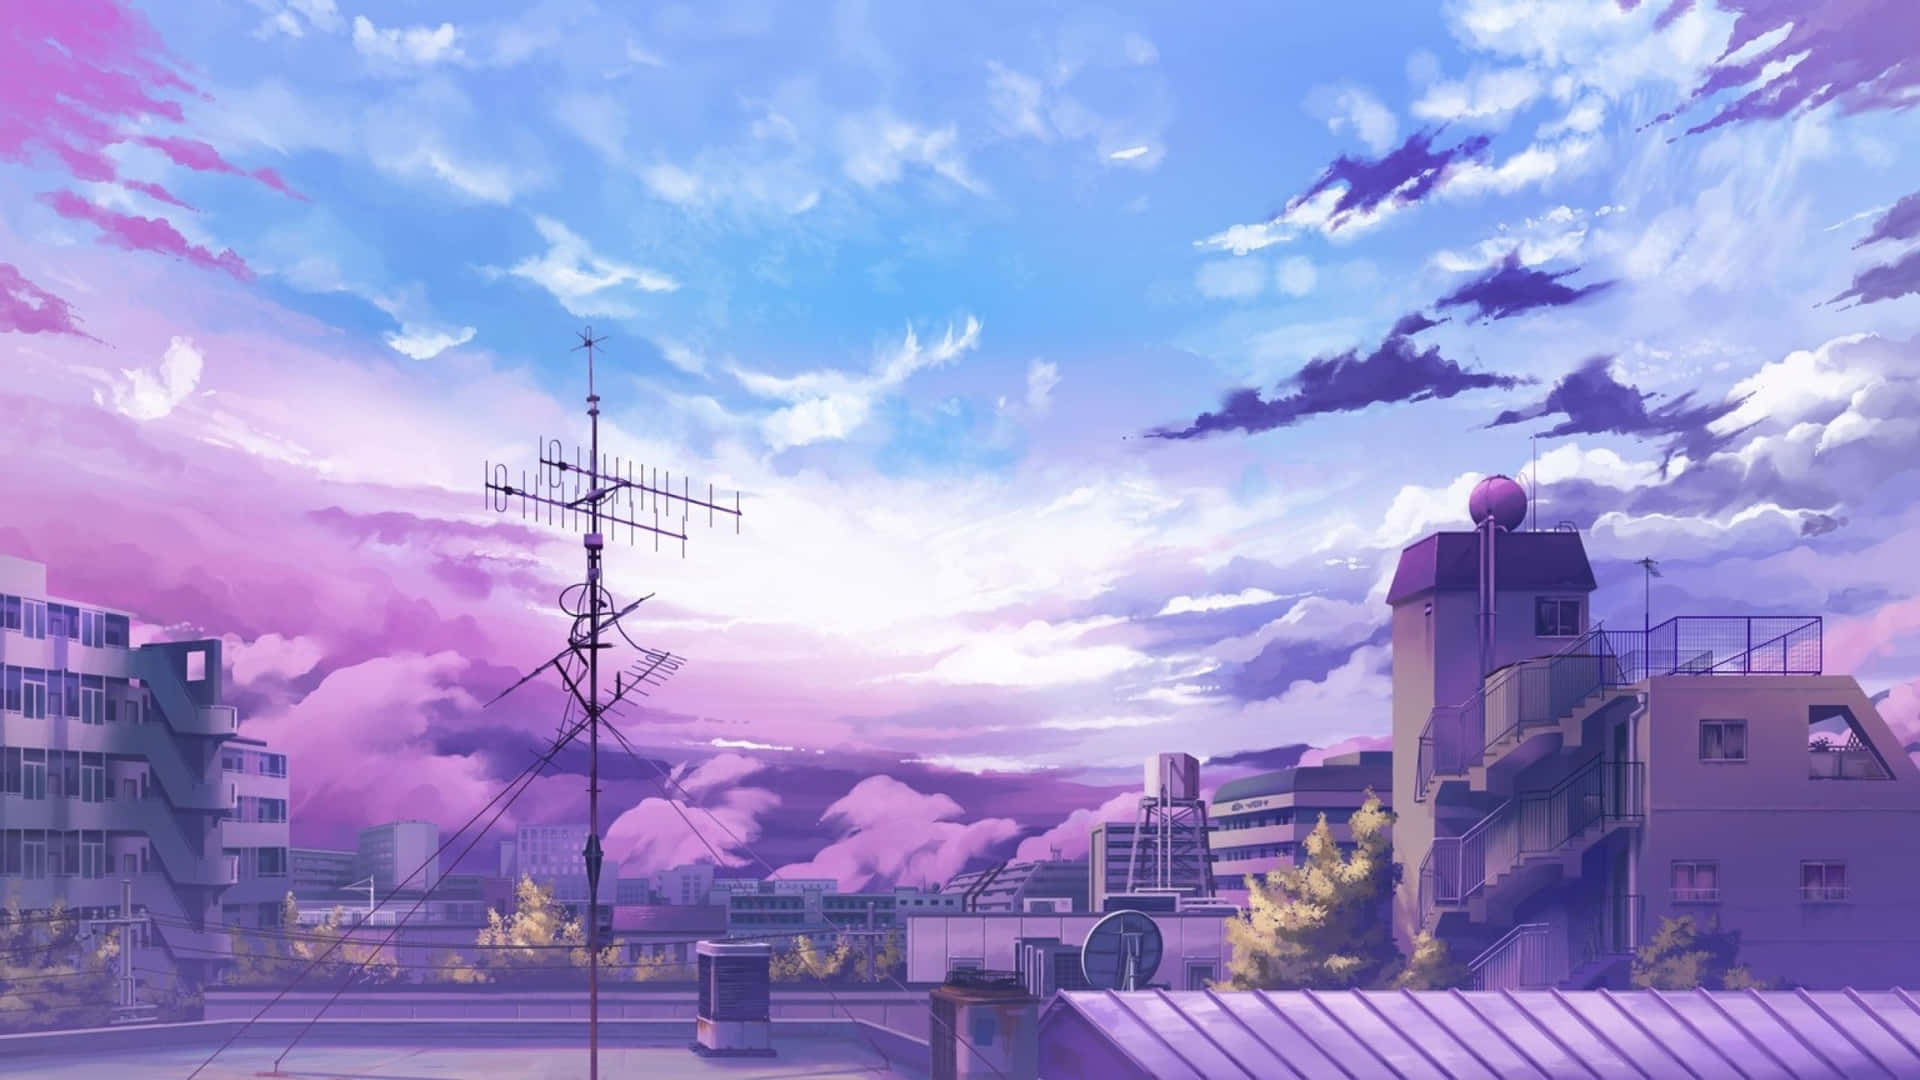 Unosfondo Desktop Luminoso E Vibrante Ispirato All'anime. Sfondo